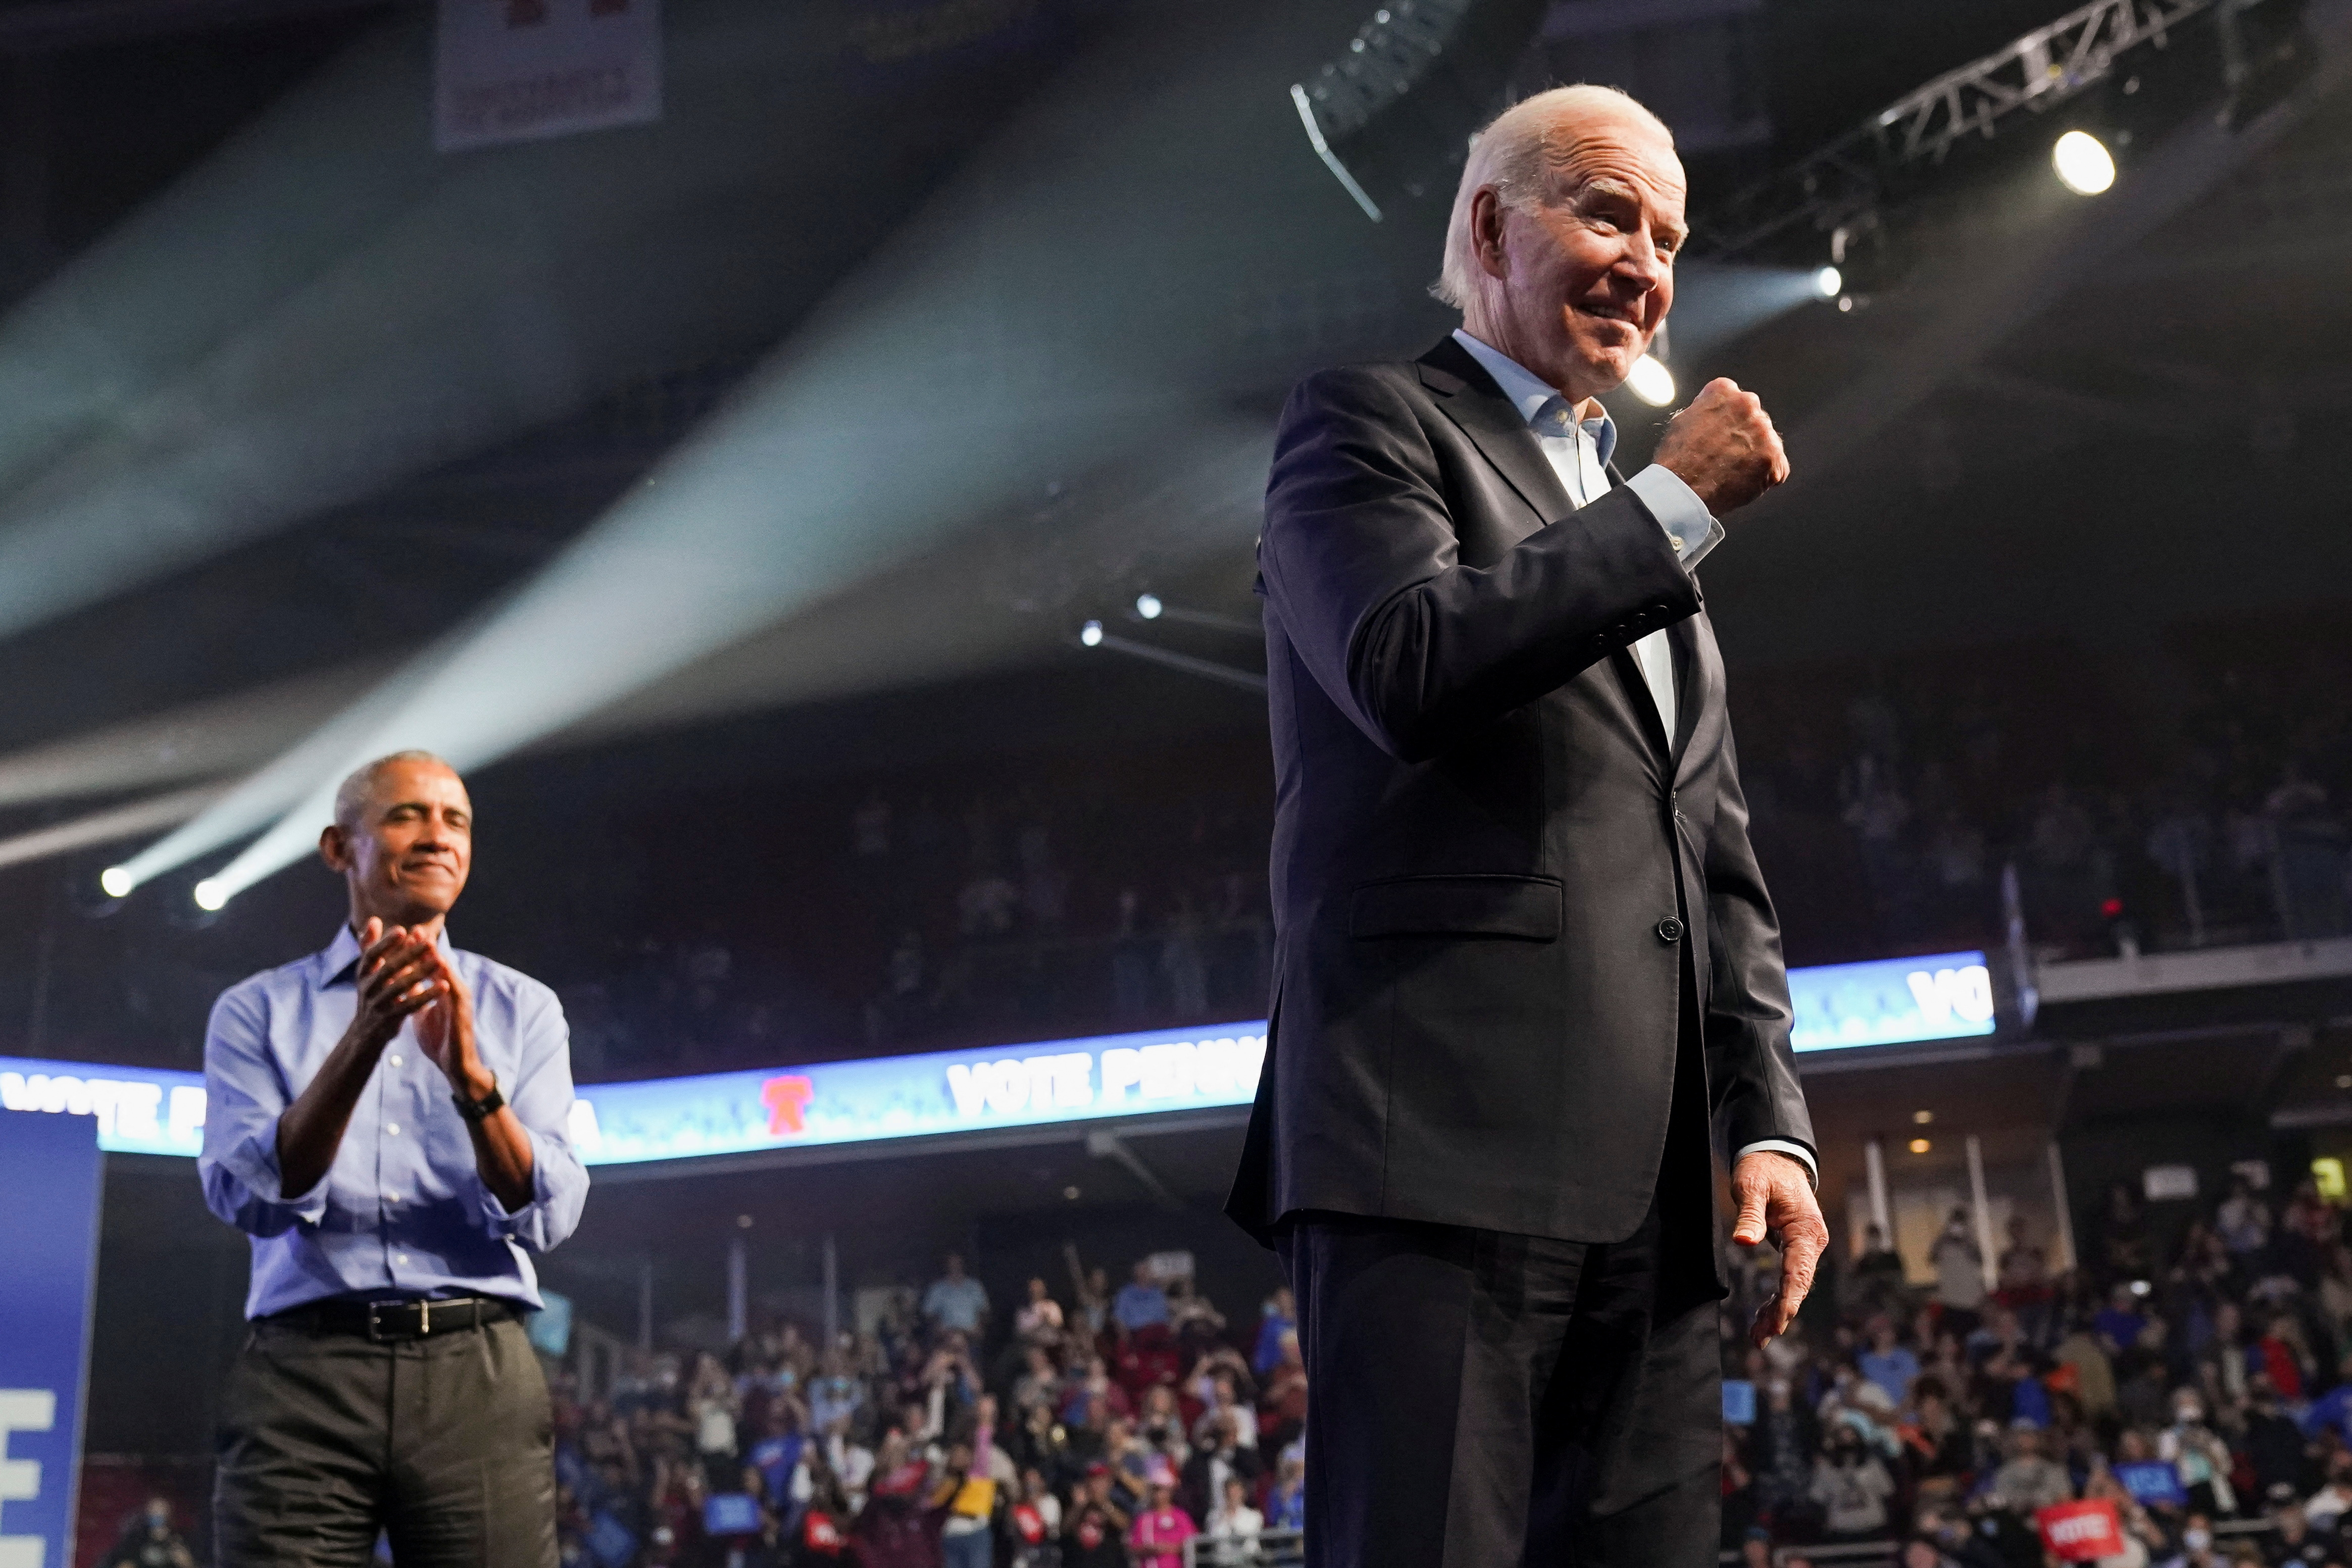 US President Joe Biden campaigns ahead of midterm elections in Pennsylvania